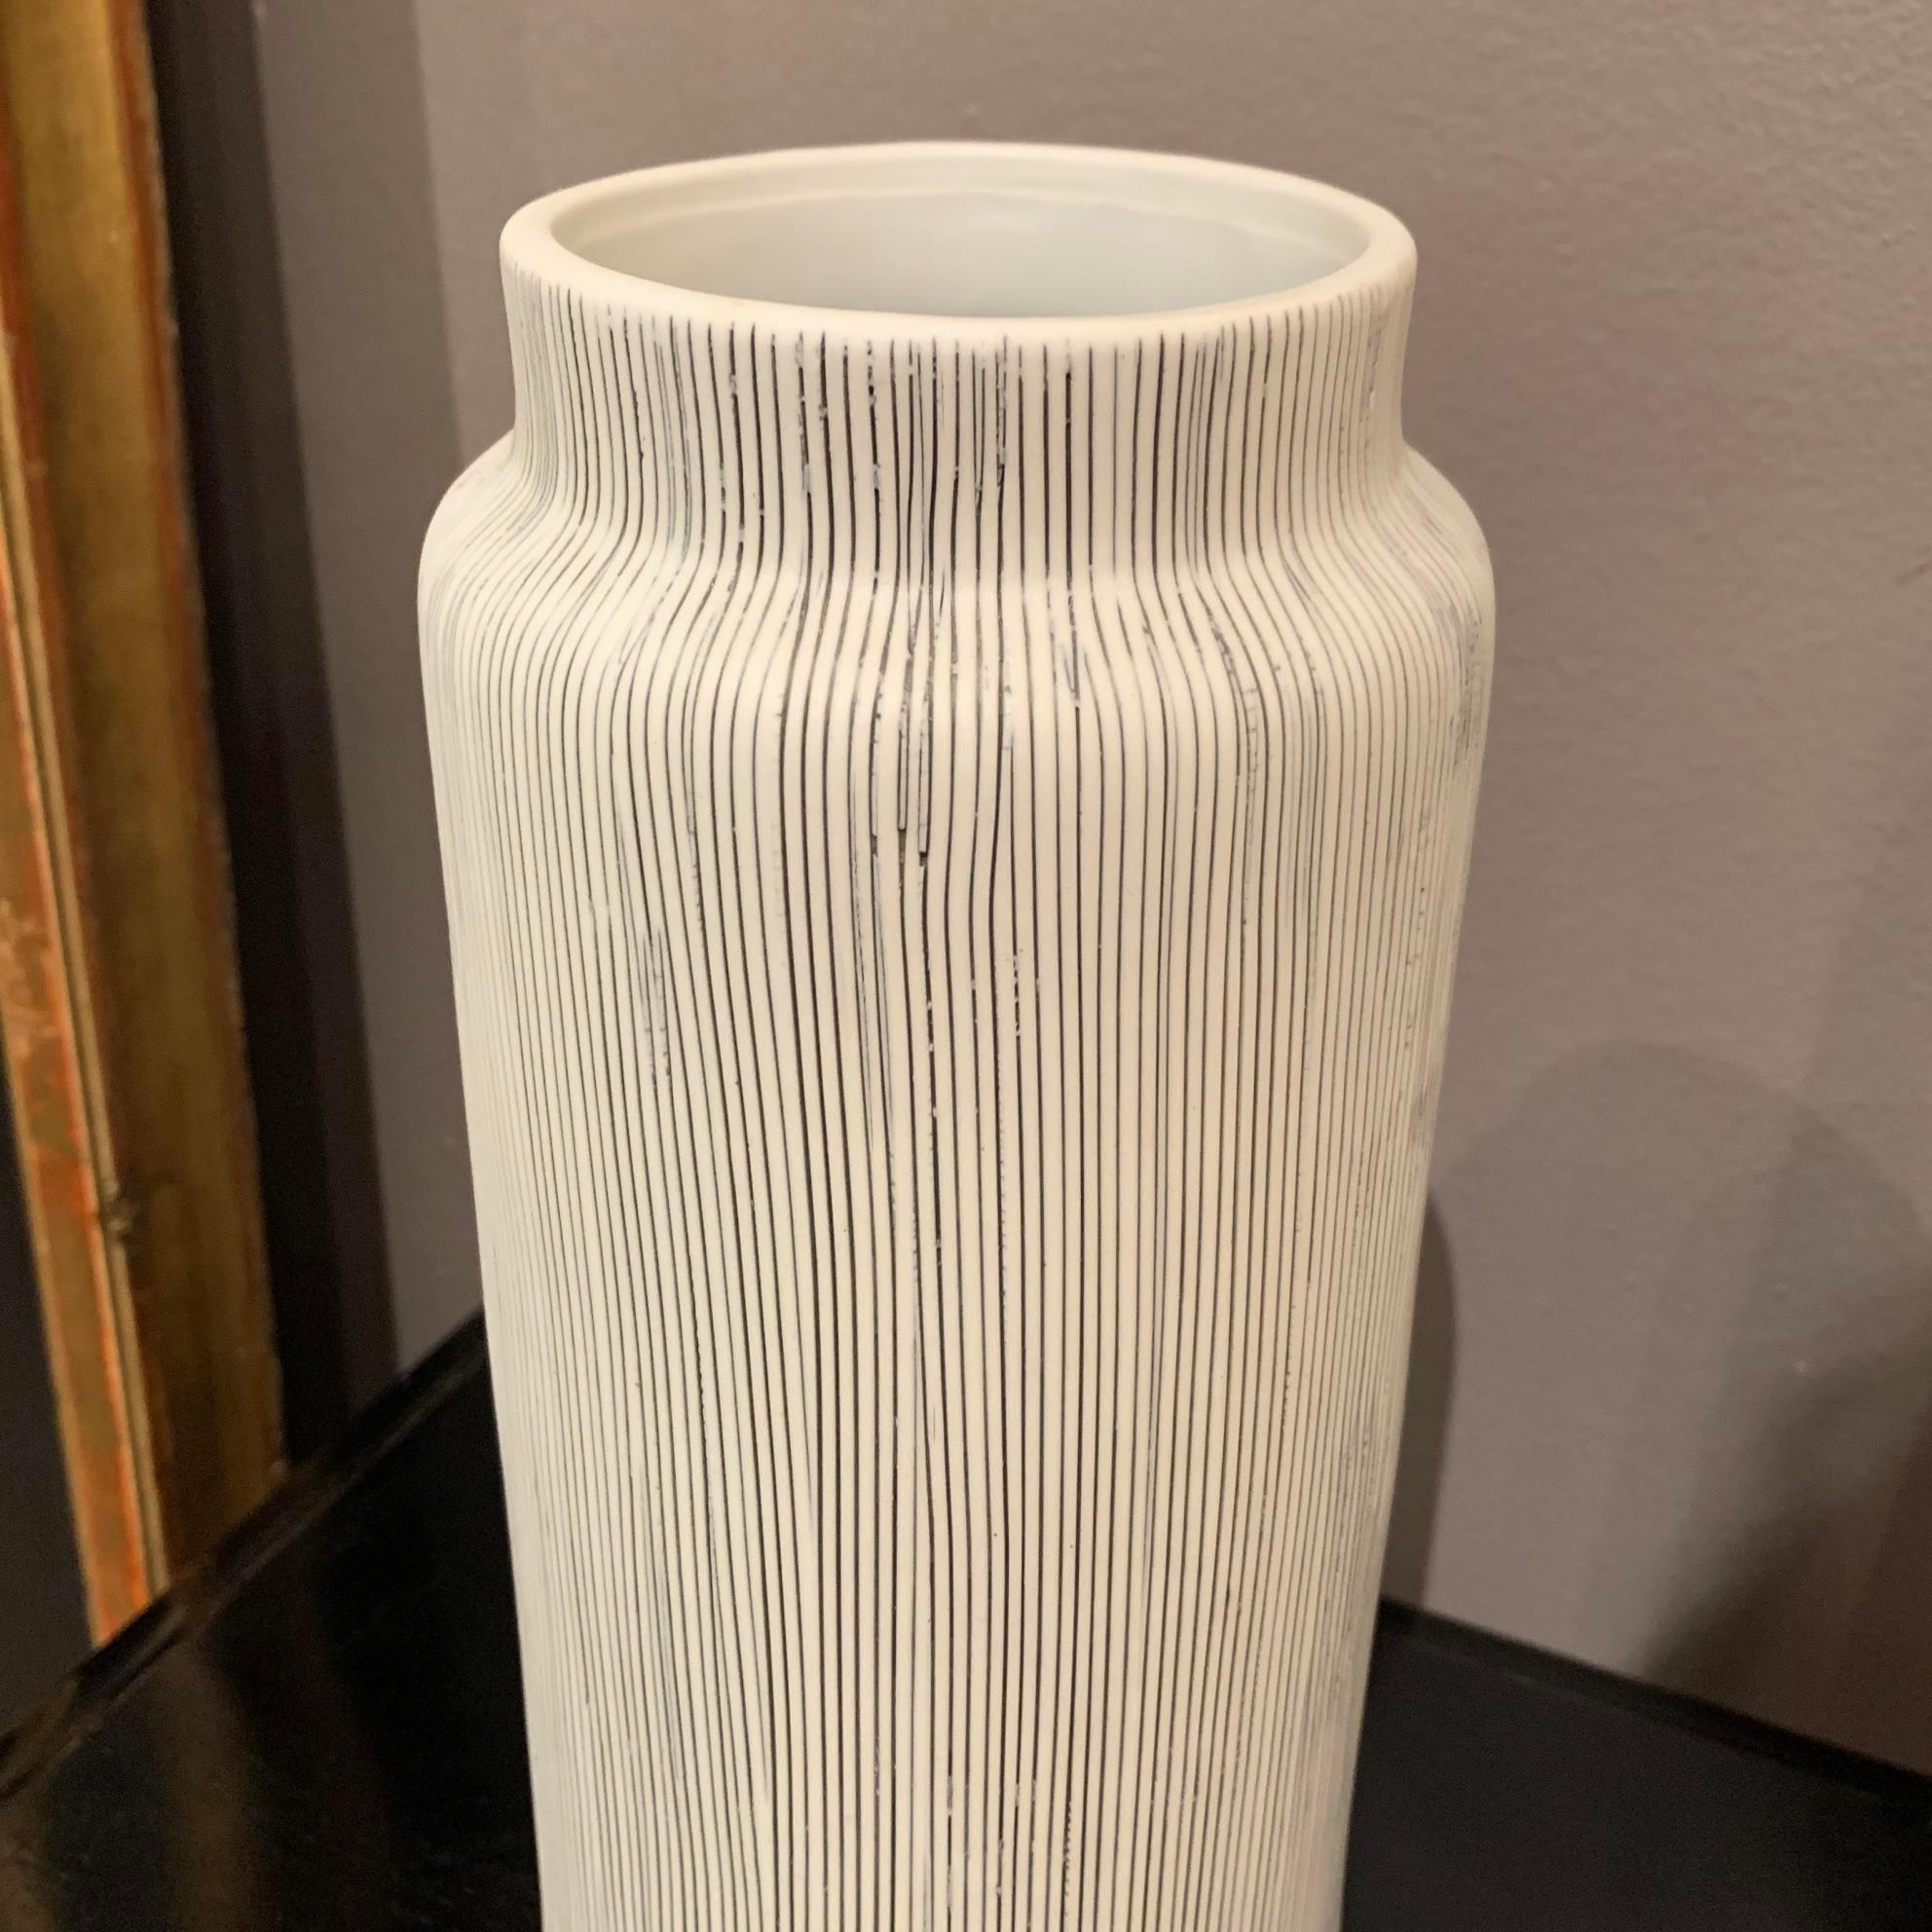 Contemporary Danish design white porcelain vase with fine black stripes.
Tall cylinder shape.
Part of a collection of Danish design vases.